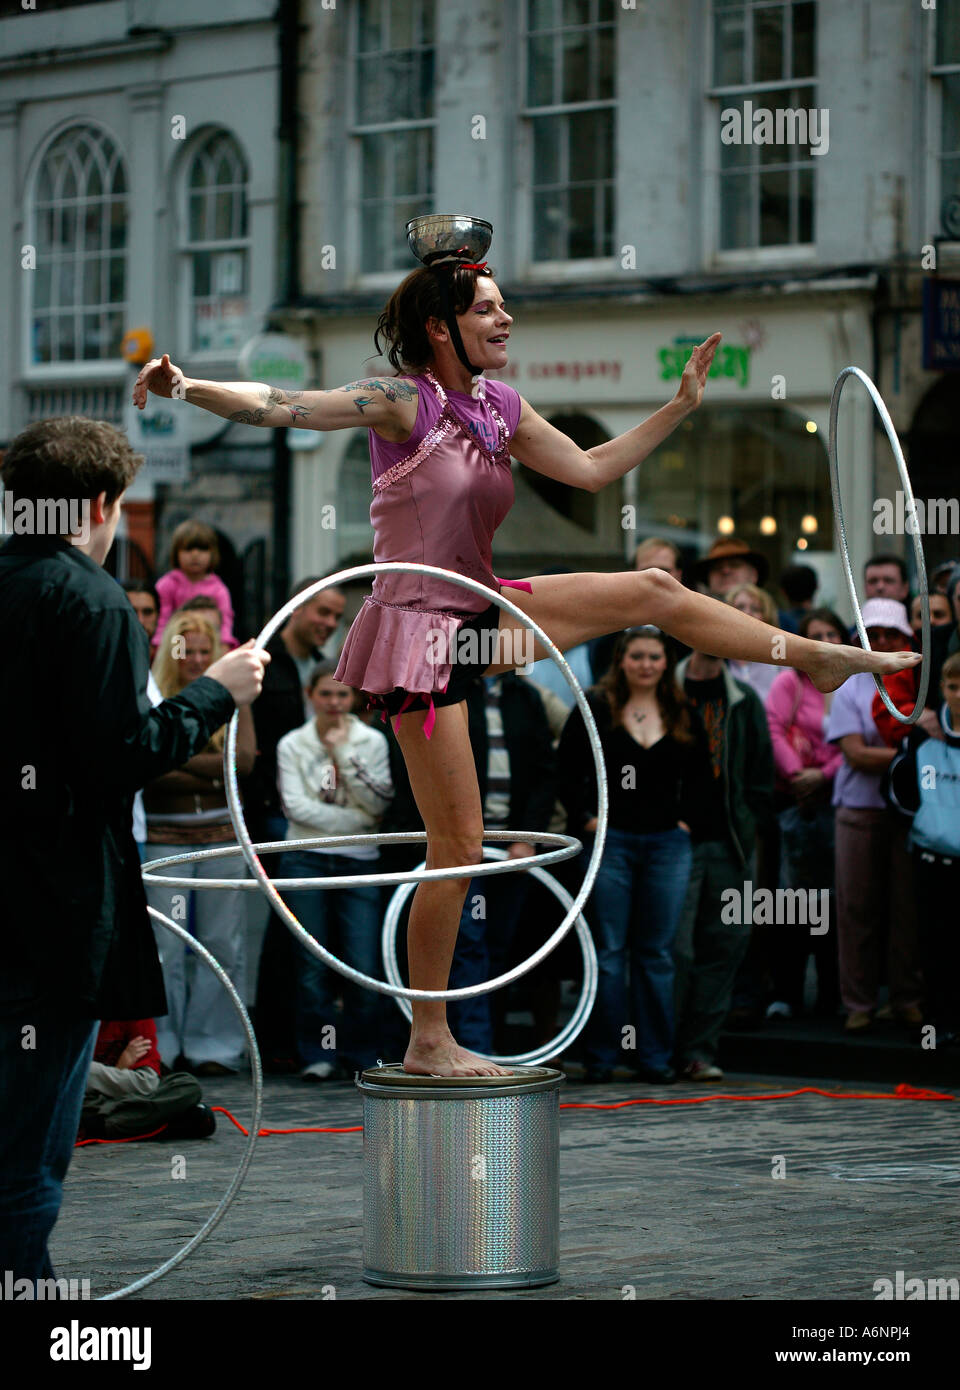 https://c8.alamy.com/comp/A6NPJ4/female-street-performer-performing-with-hula-hoops-at-edinburgh-fringe-A6NPJ4.jpg